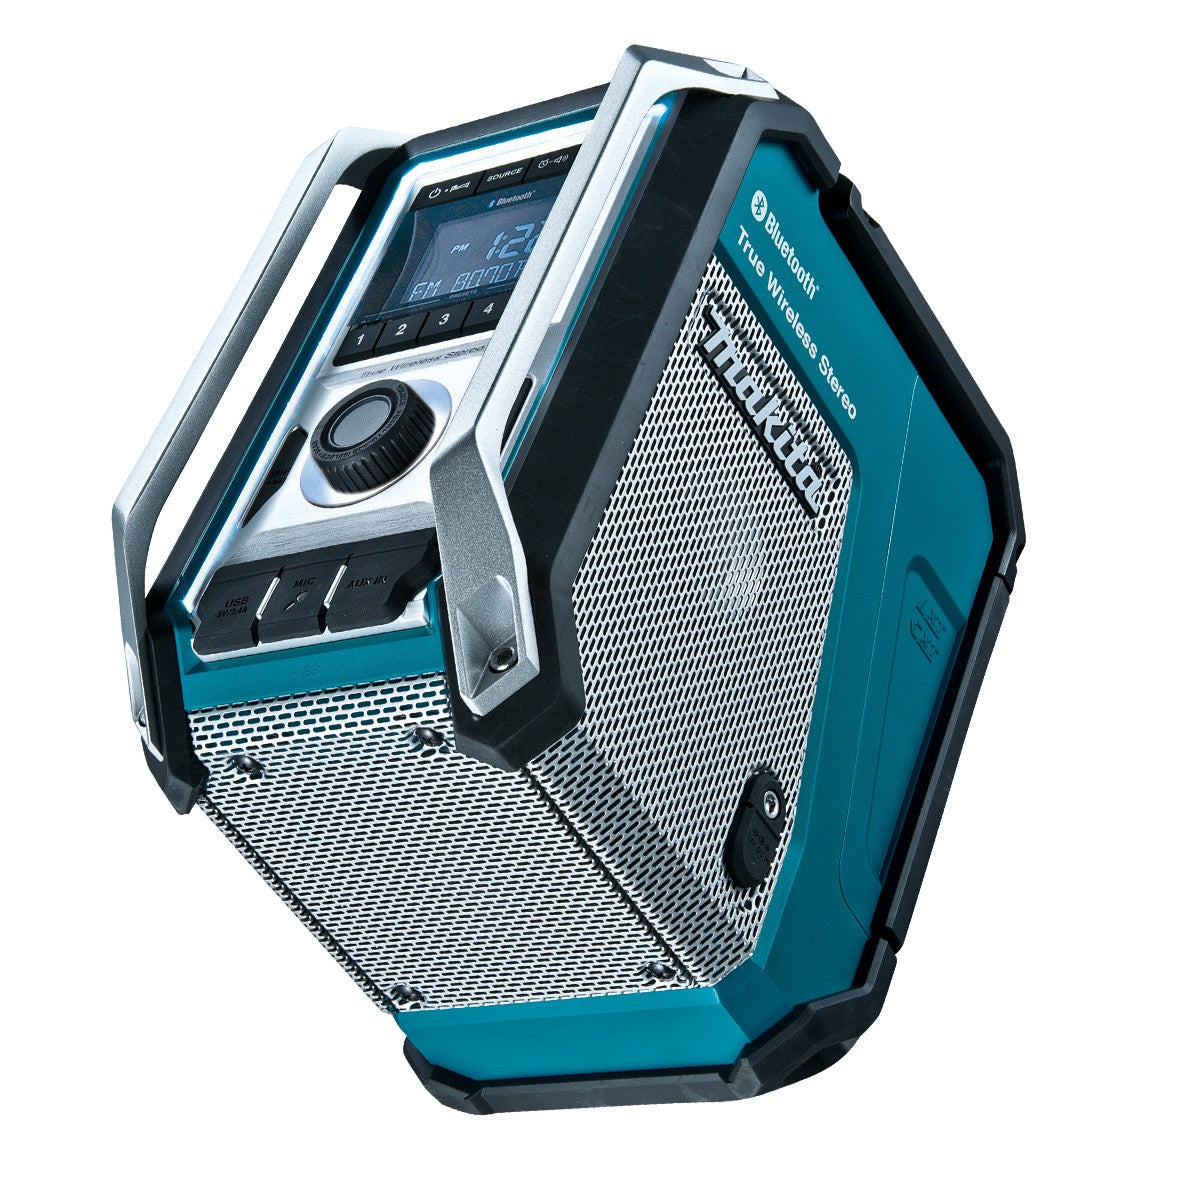 40V Bluetooth Jobsite Radio Bare (Tool Only) MR005GZ by Makita